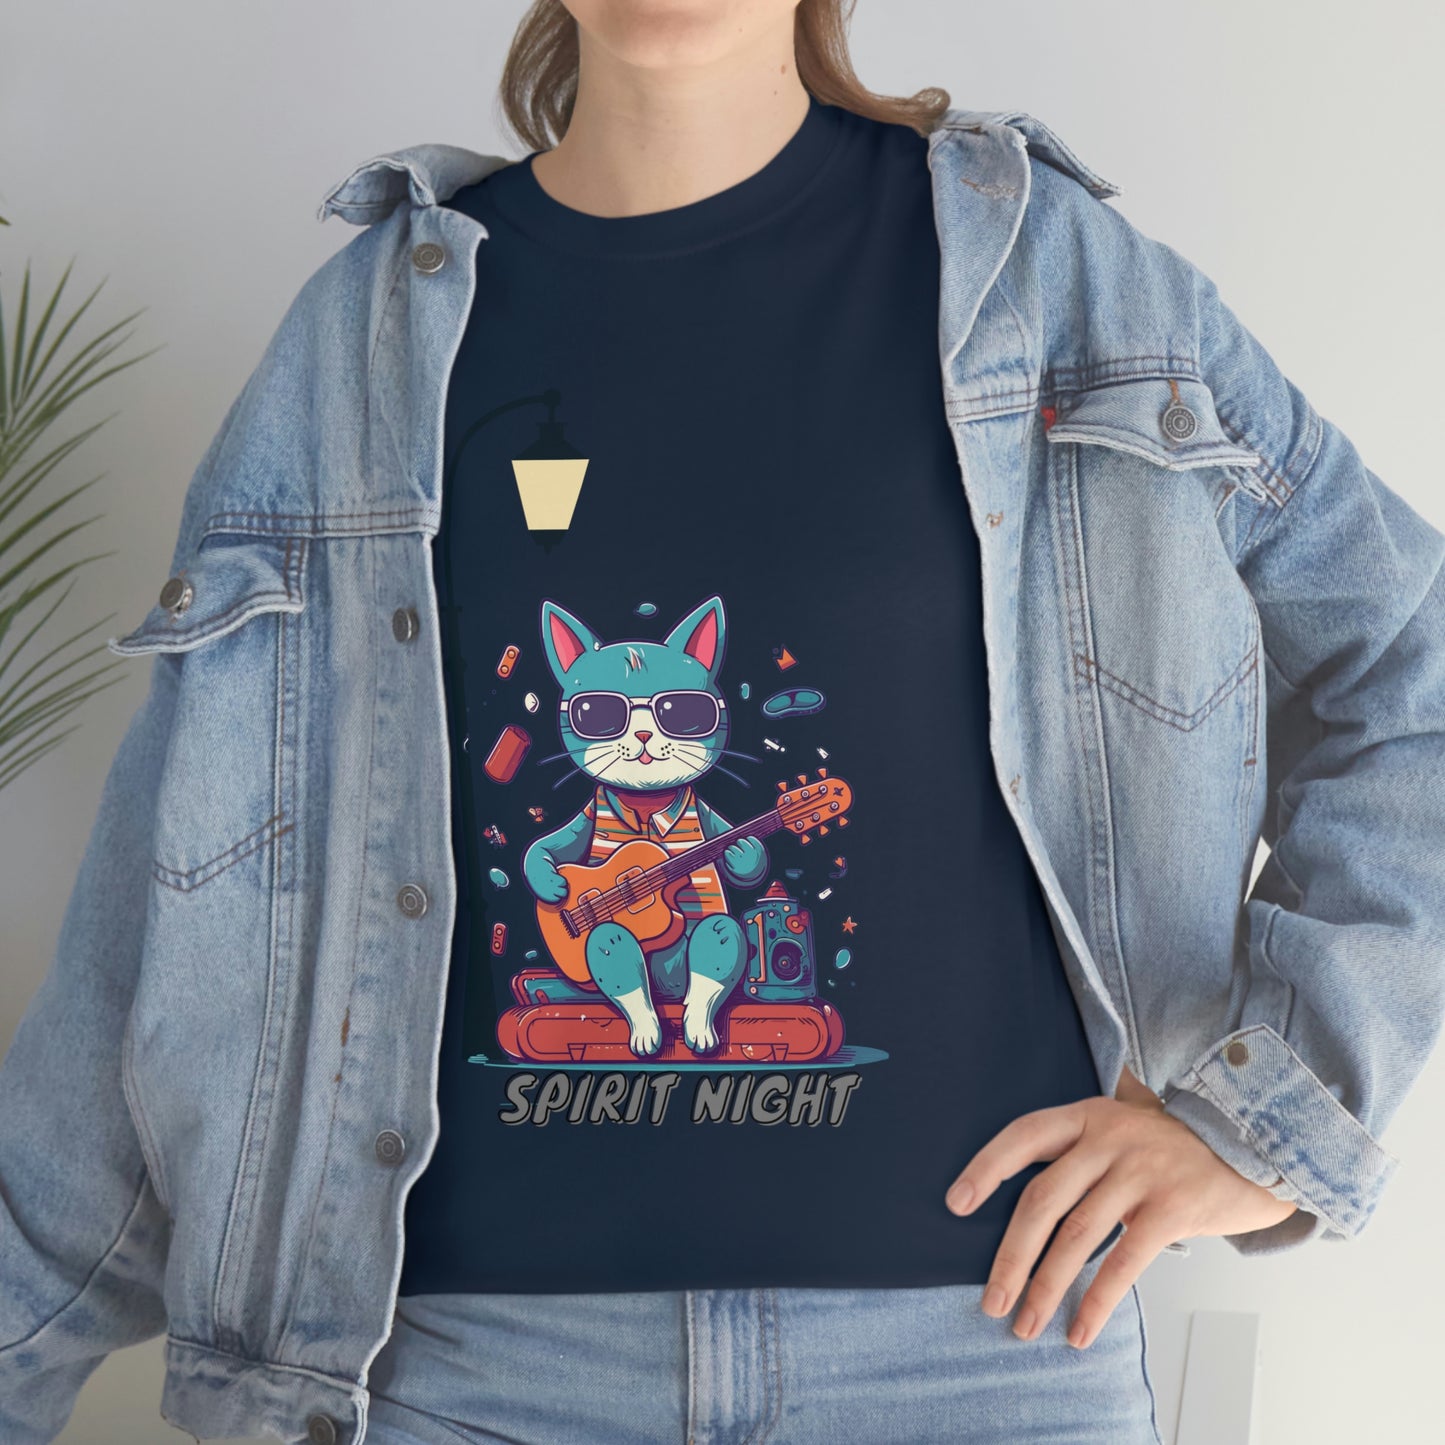 Feline Frenzy: Spirit Night with Cat and Guitar Unisex Tee